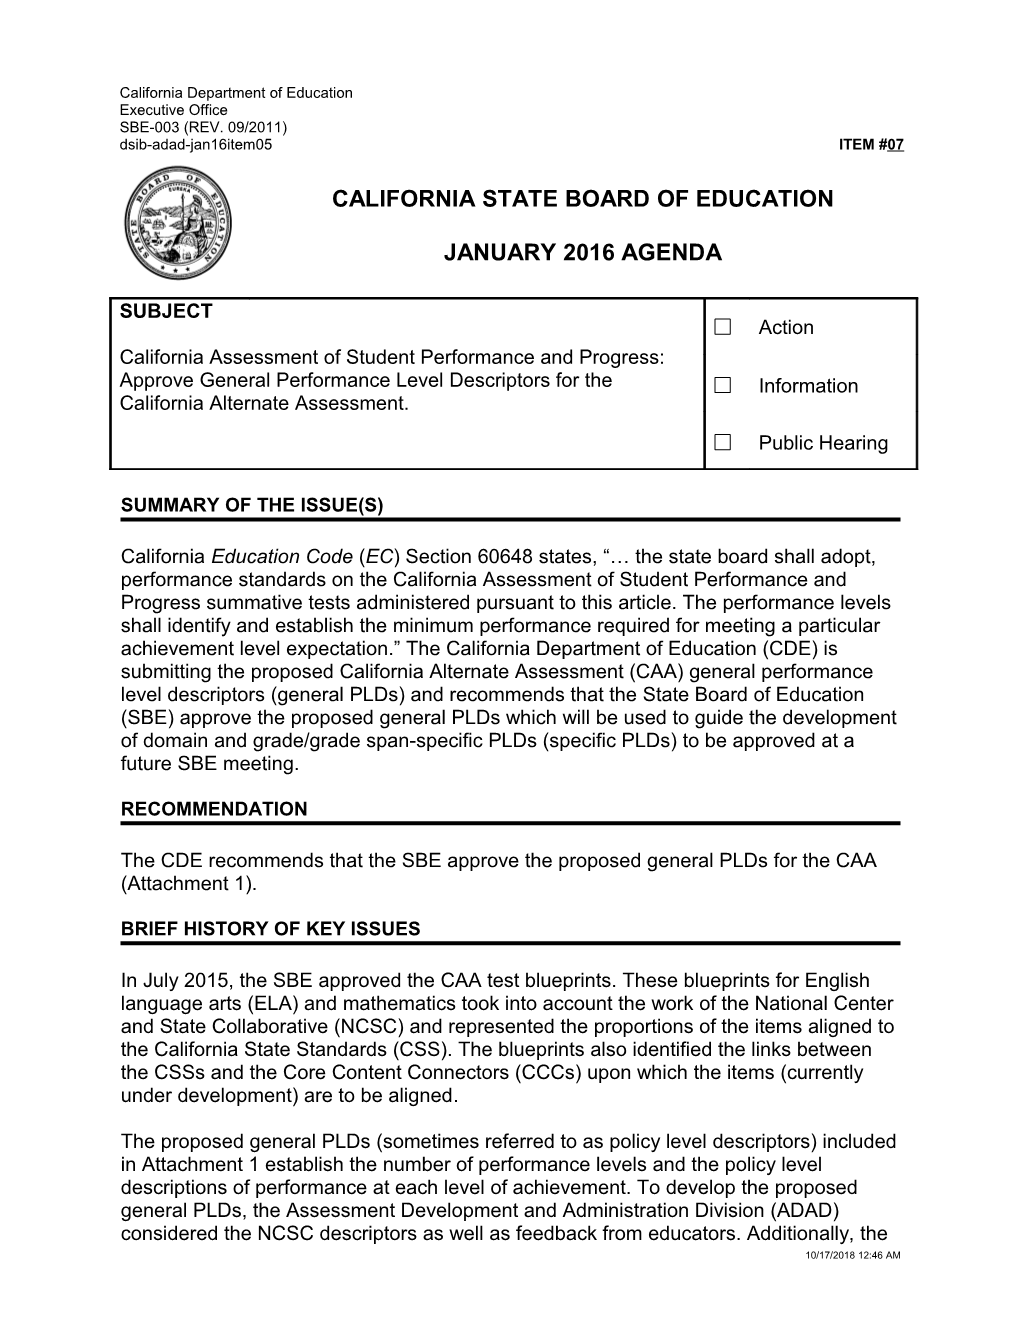 January 2016 Agenda Item 07 - Meeting Agendas (CA State Board of Education)